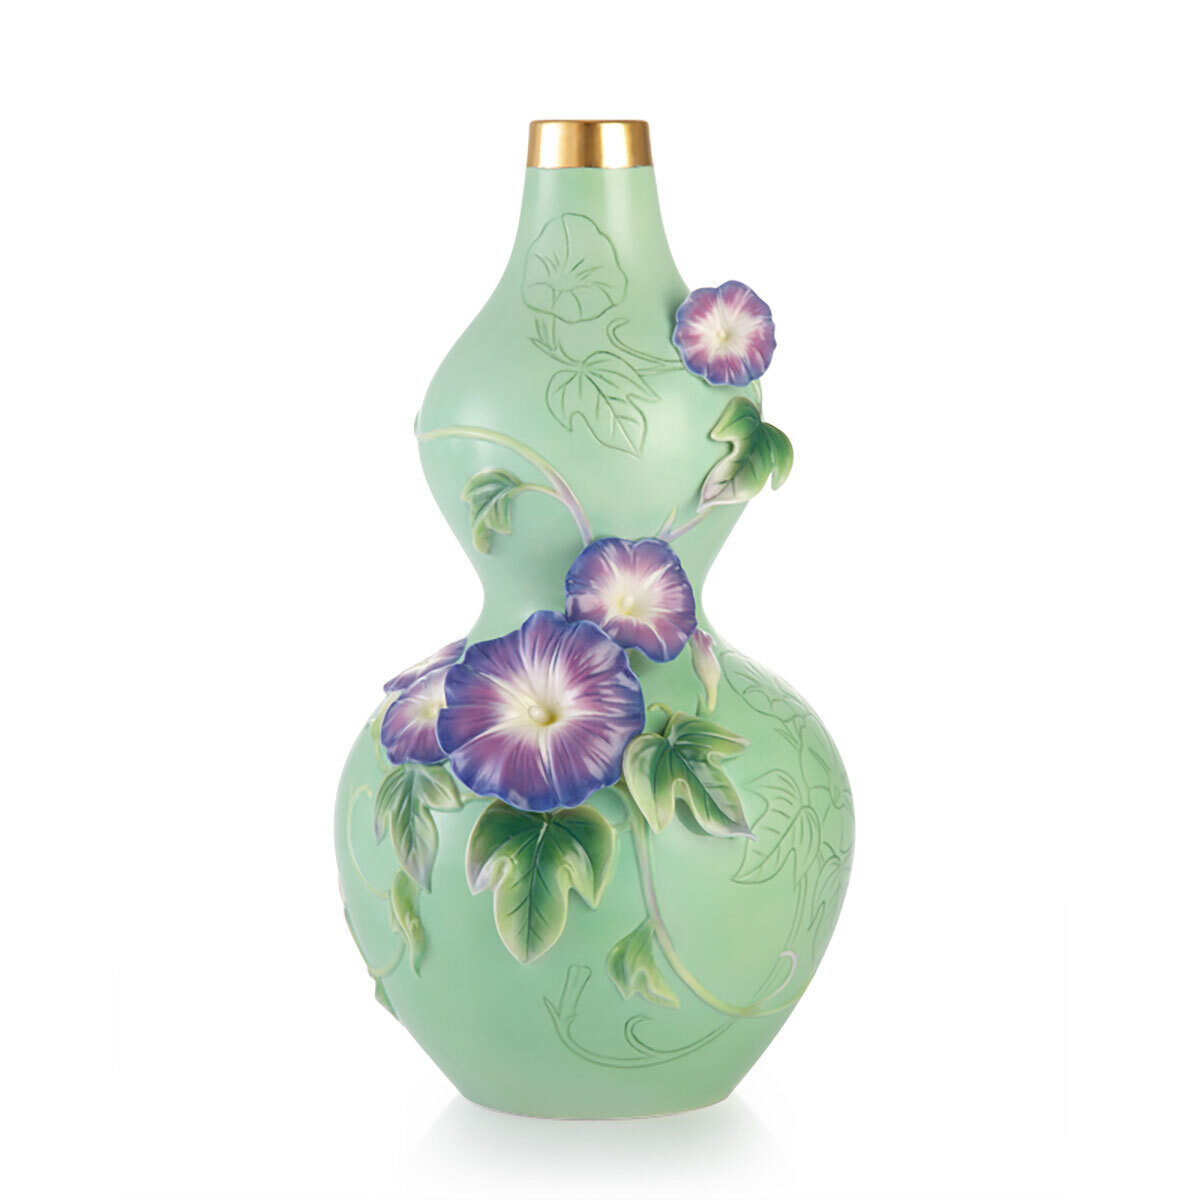 Franz Porcelain Destiny Morning Glory Vase Limited Editon of 2000 FZ03370